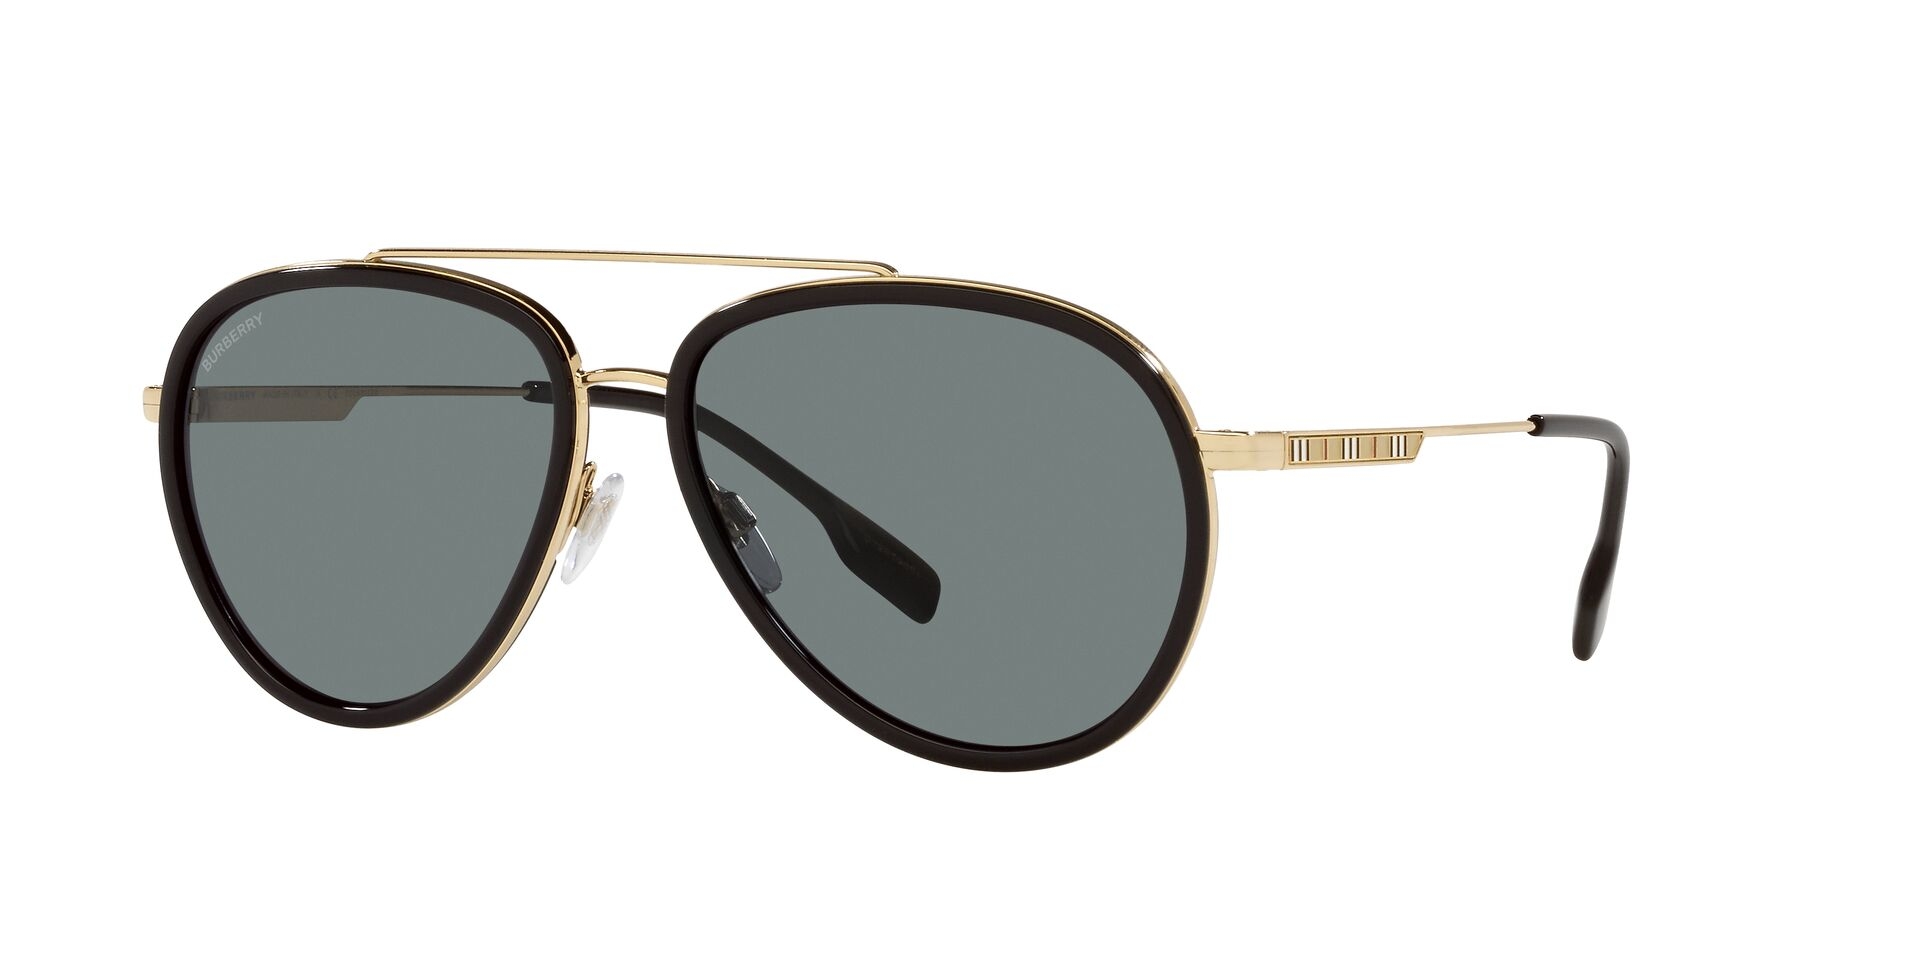 Buy AEVOGUE Alloy Frame Men's Sunglasses (AE0336, Gold|Black) at Amazon.in